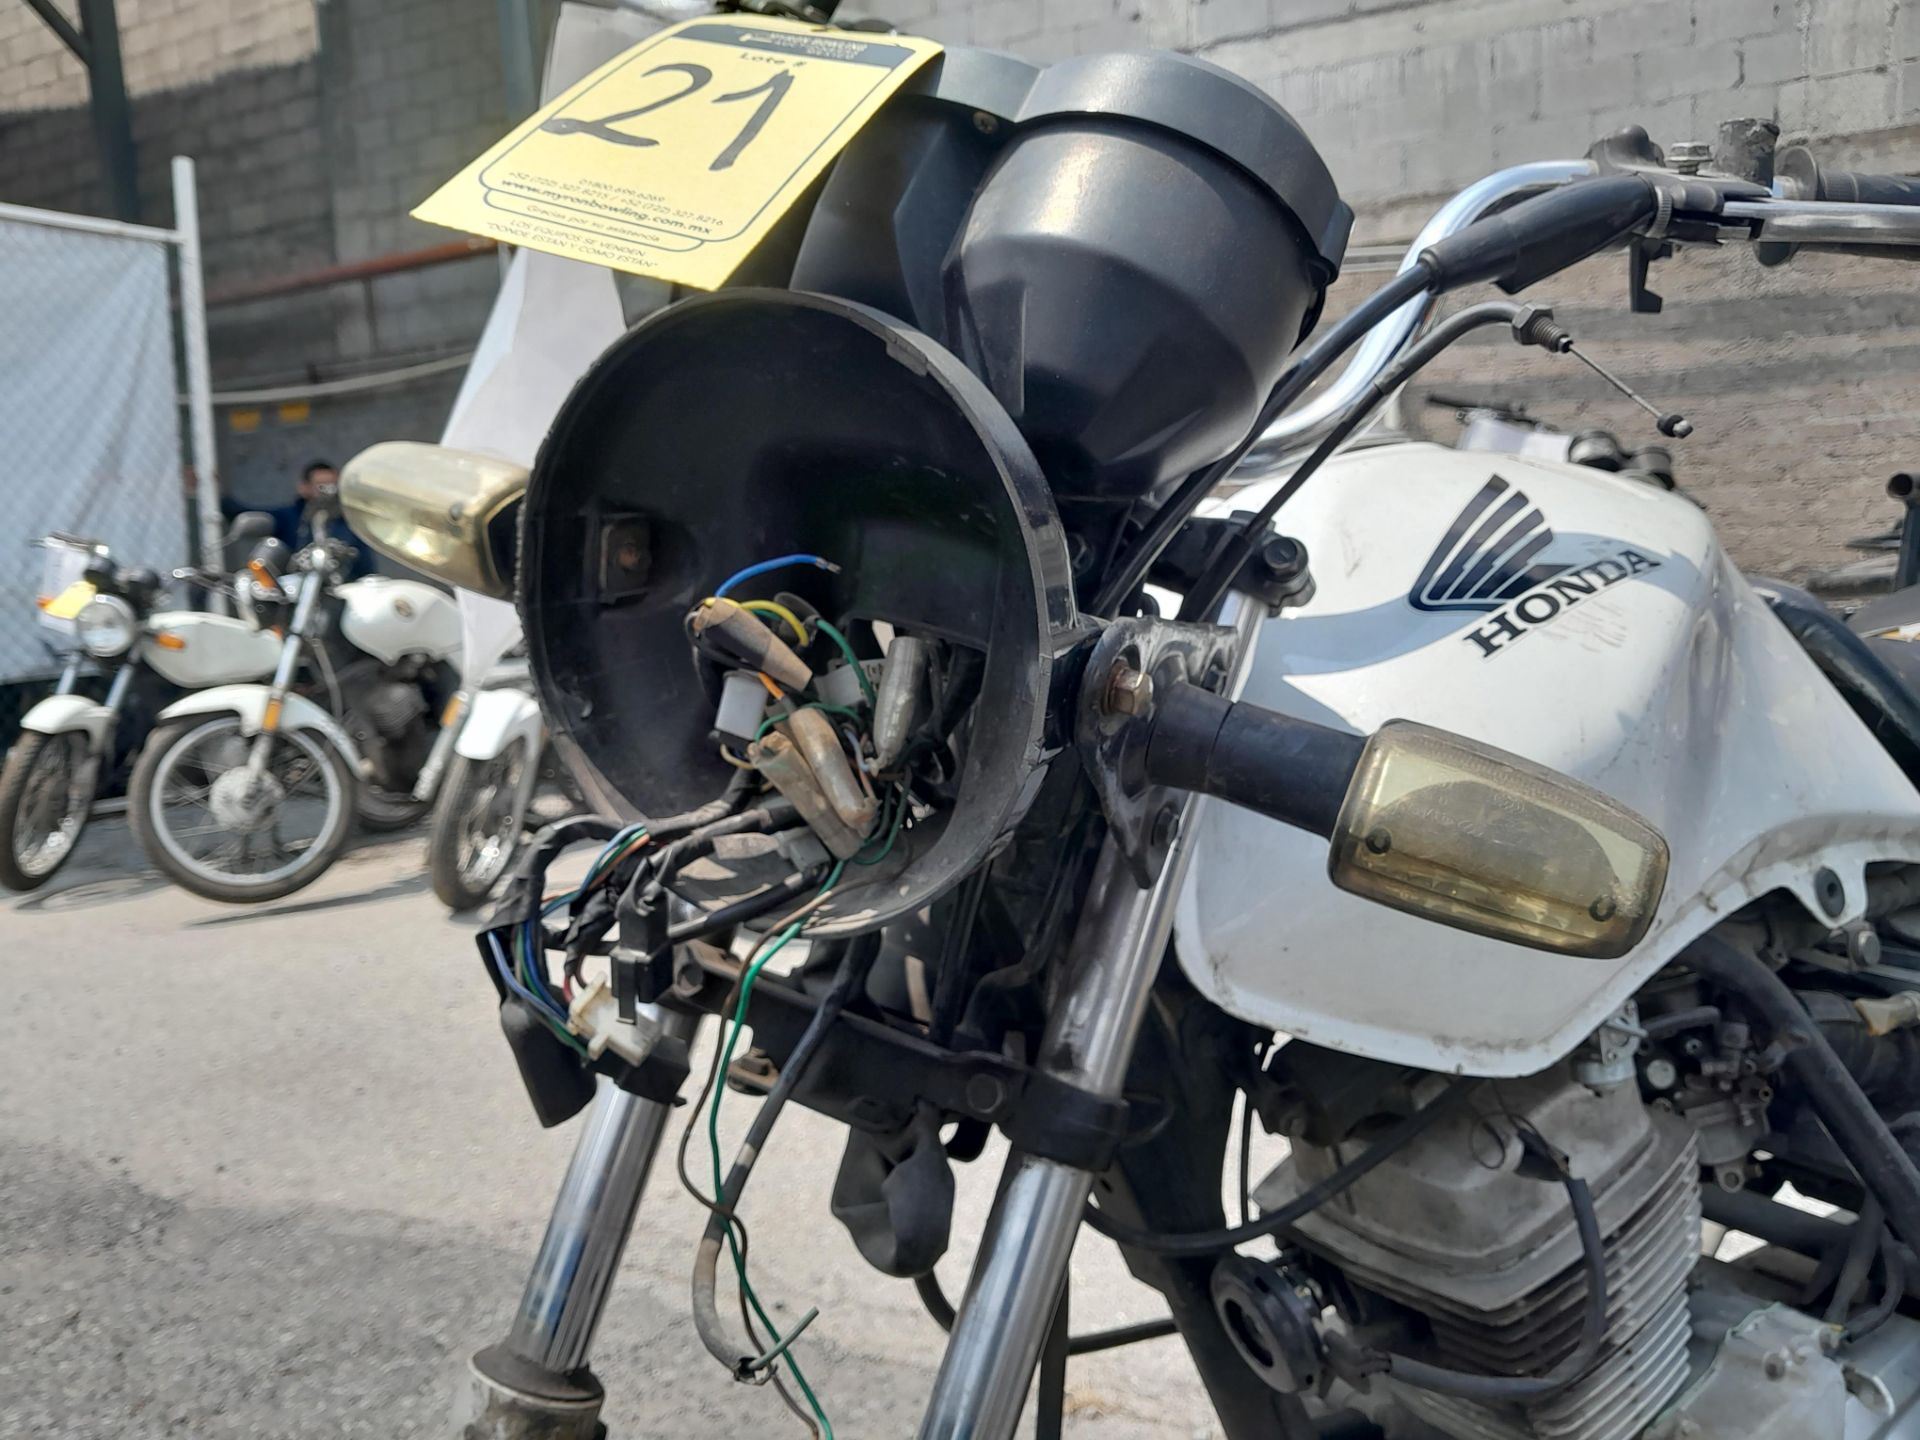 Lote de 2 Motocicletas contiene: 1 Motocicleta de trabajo usada Marca Honda Cargo 150, Modelo 2017, - Image 8 of 11